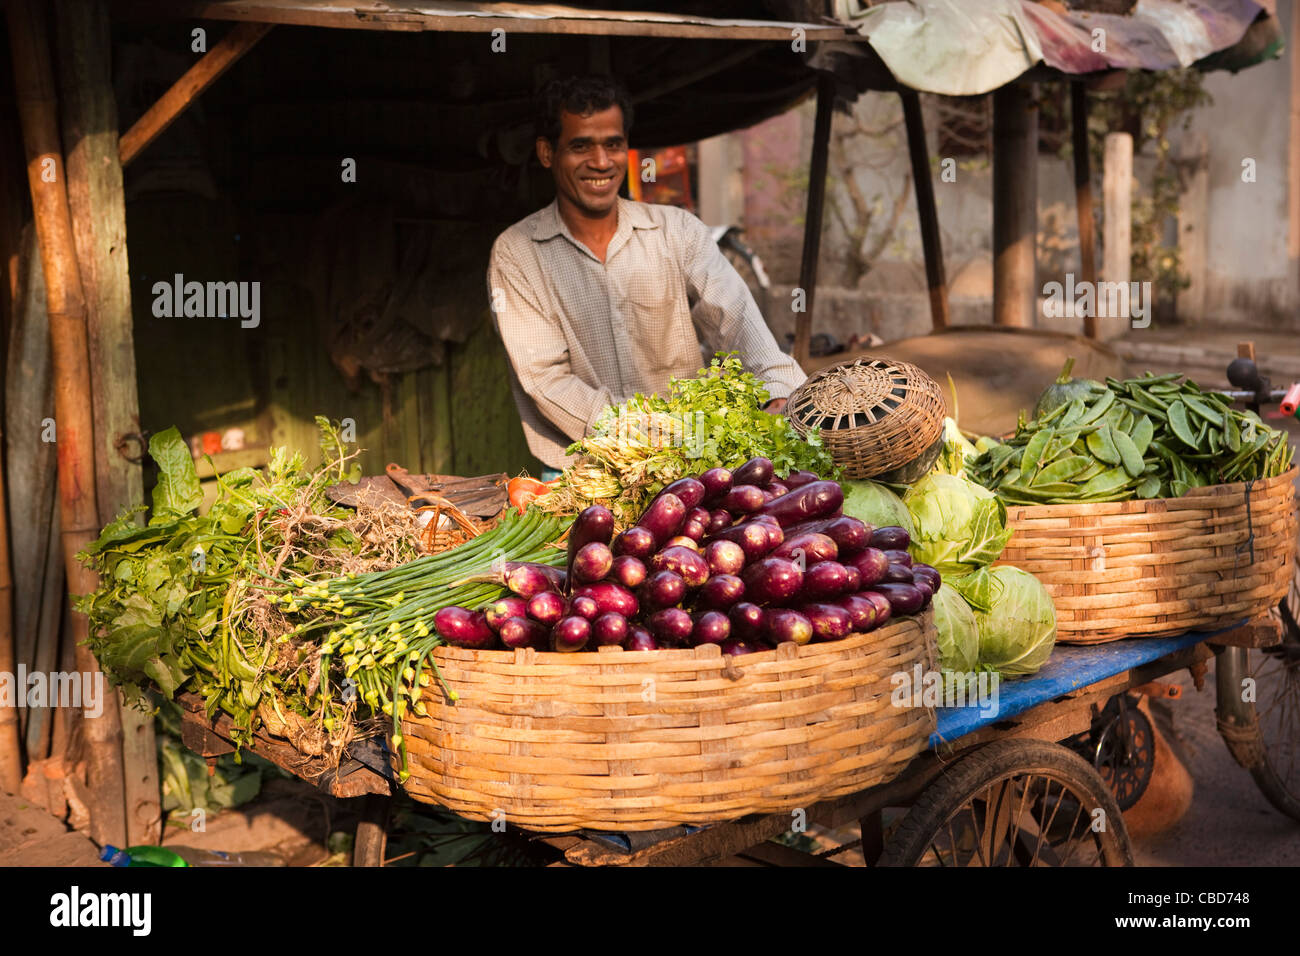 India, West Bengal, Kolkata, Rabindra Sarovar, roadside vegetable stall, smiling vendor Stock Photo